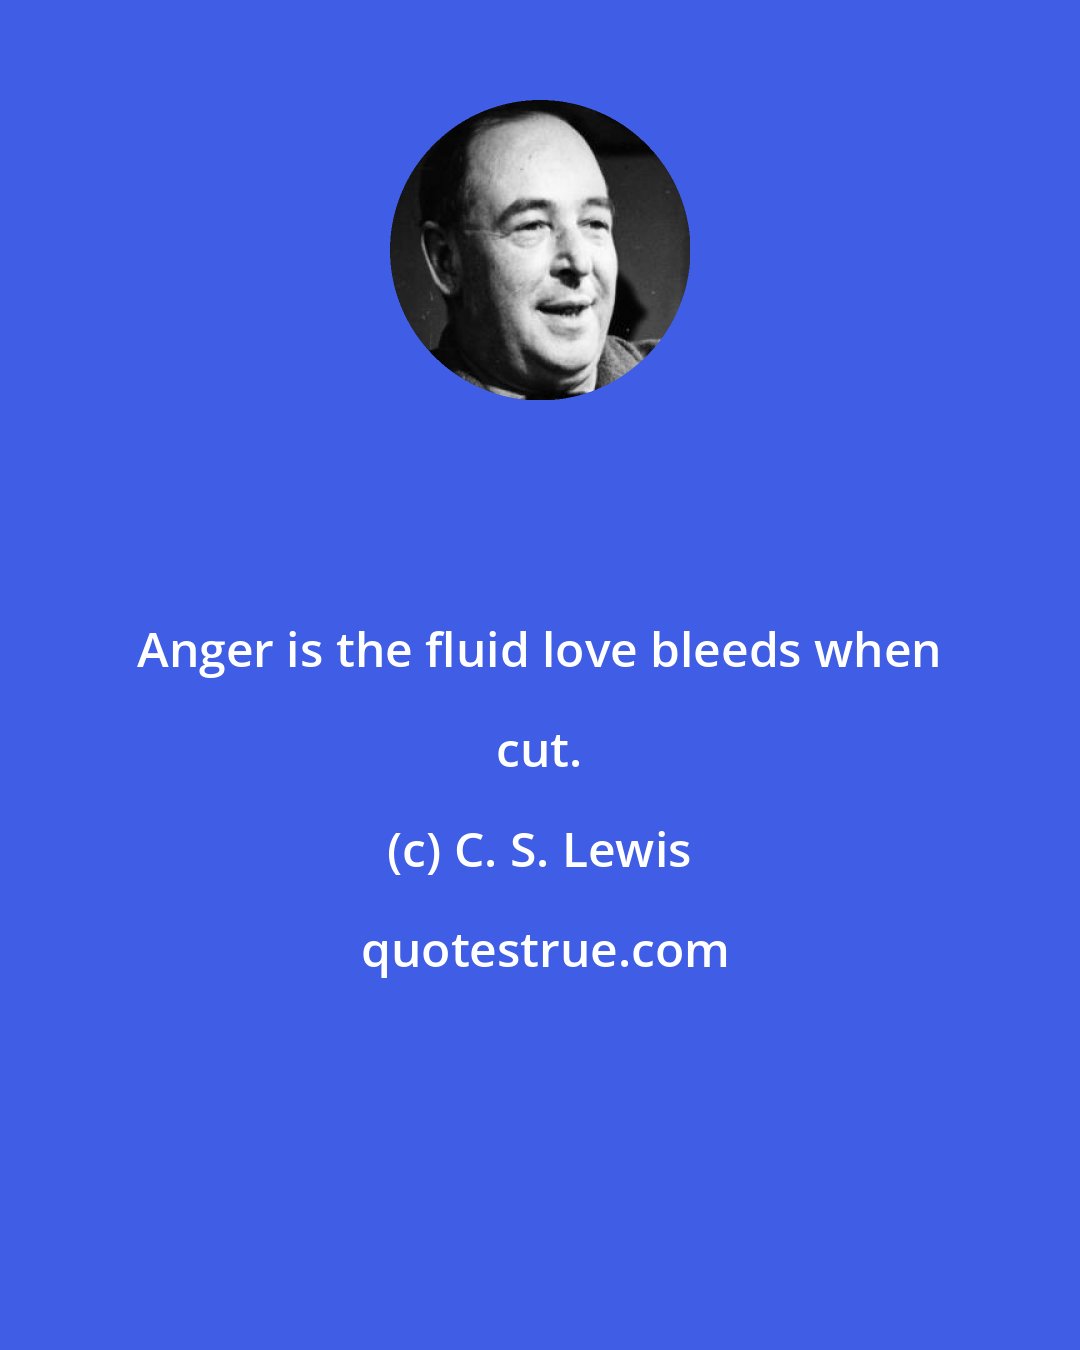 C. S. Lewis: Anger is the fluid love bleeds when cut.